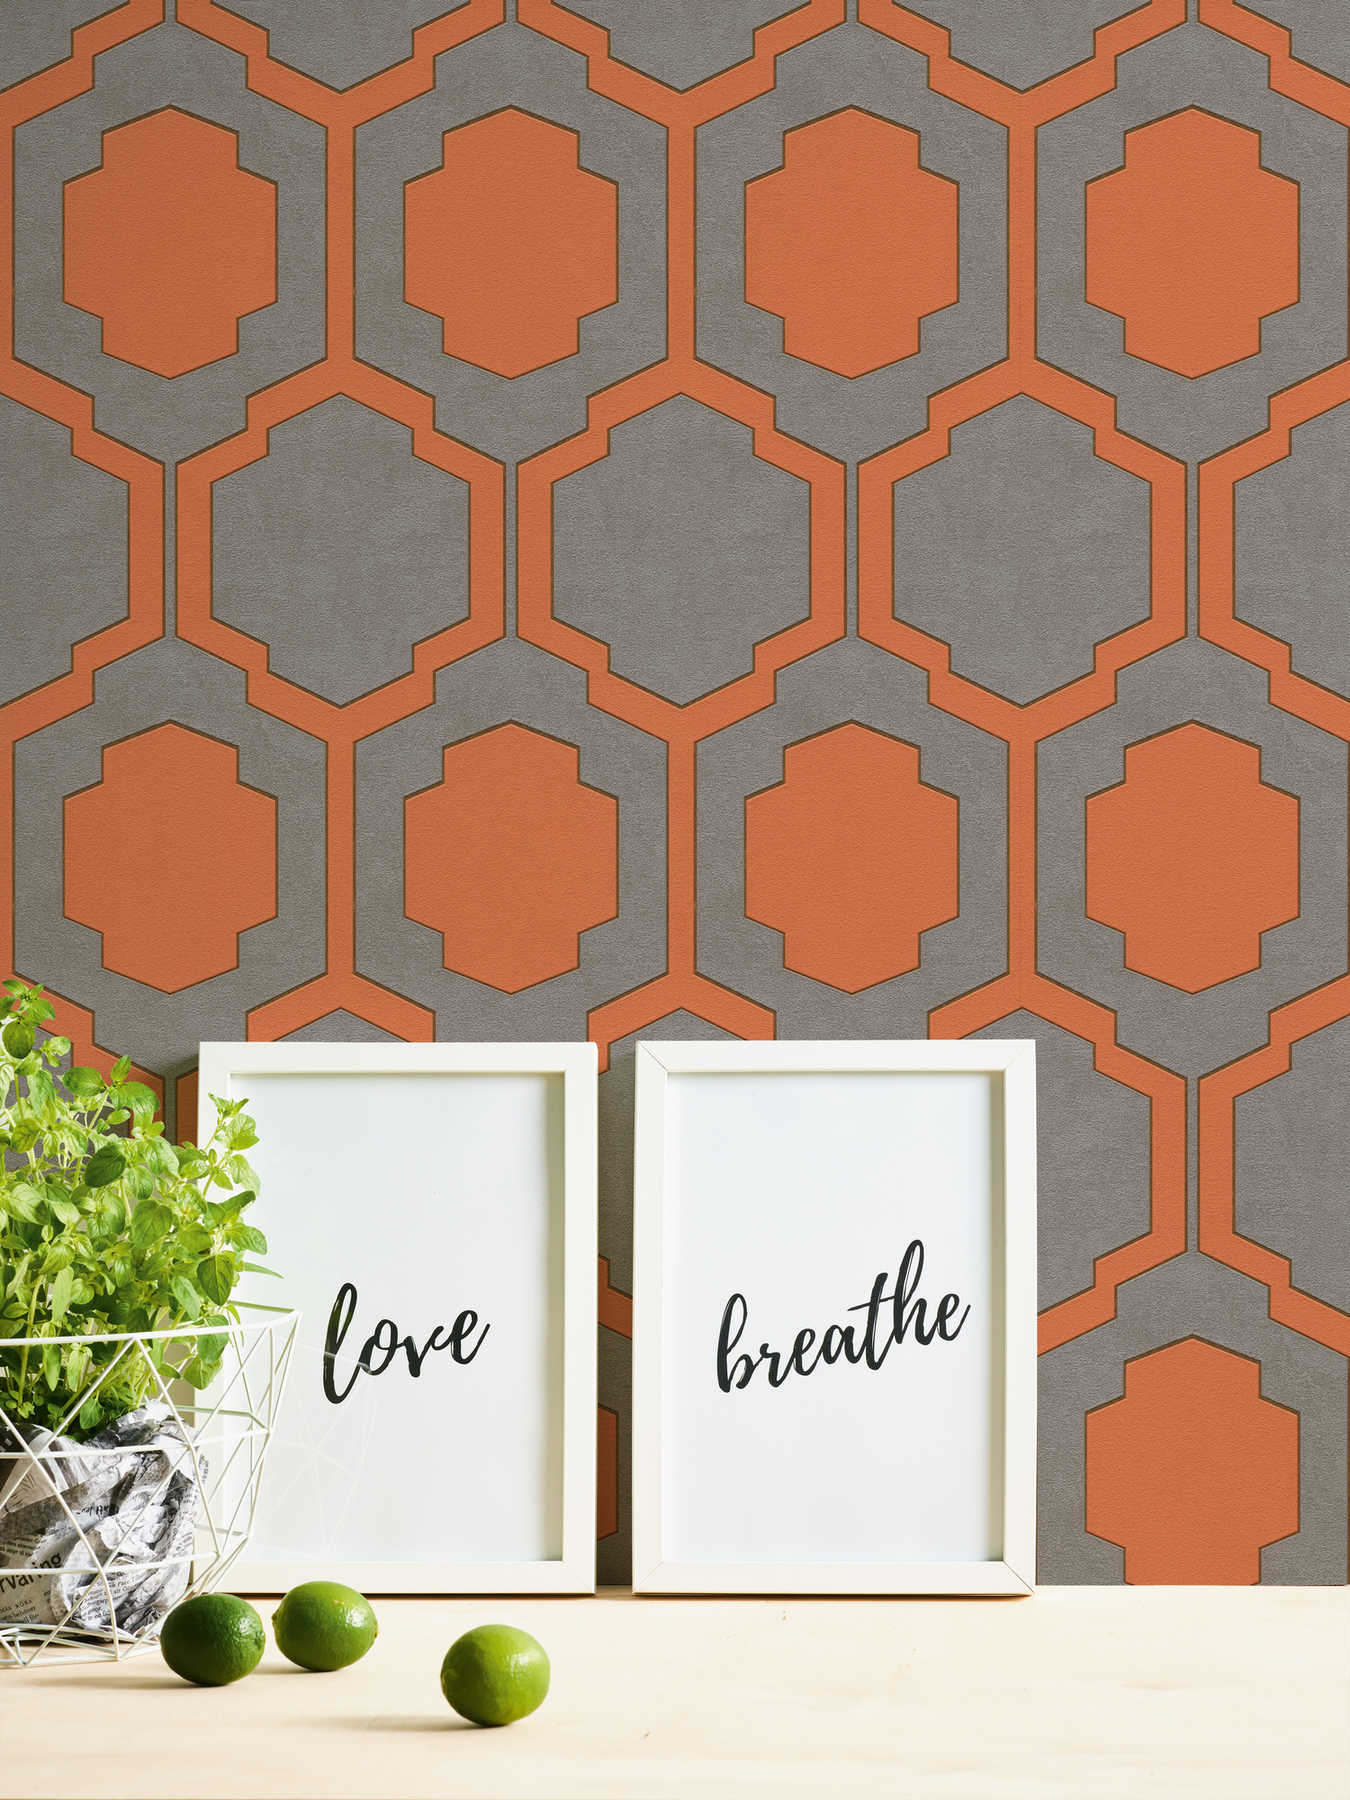             Pattern wallpaper retro look - orange, grey, beige
        